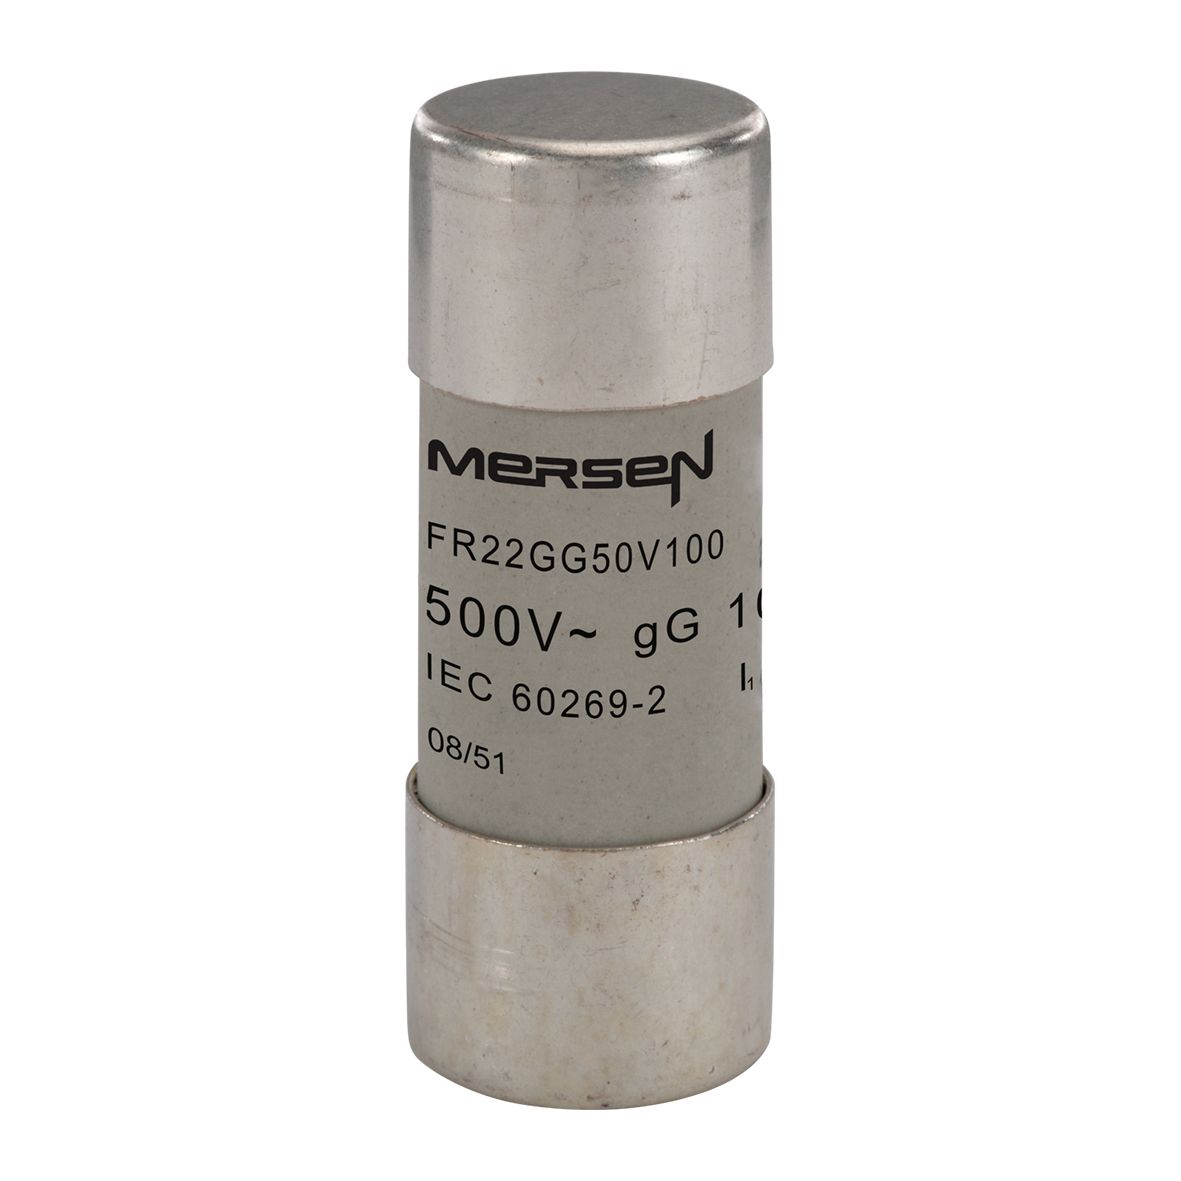 E218205 - Cylindrical fuse-link gG 500VAC 22.2x58, 100A